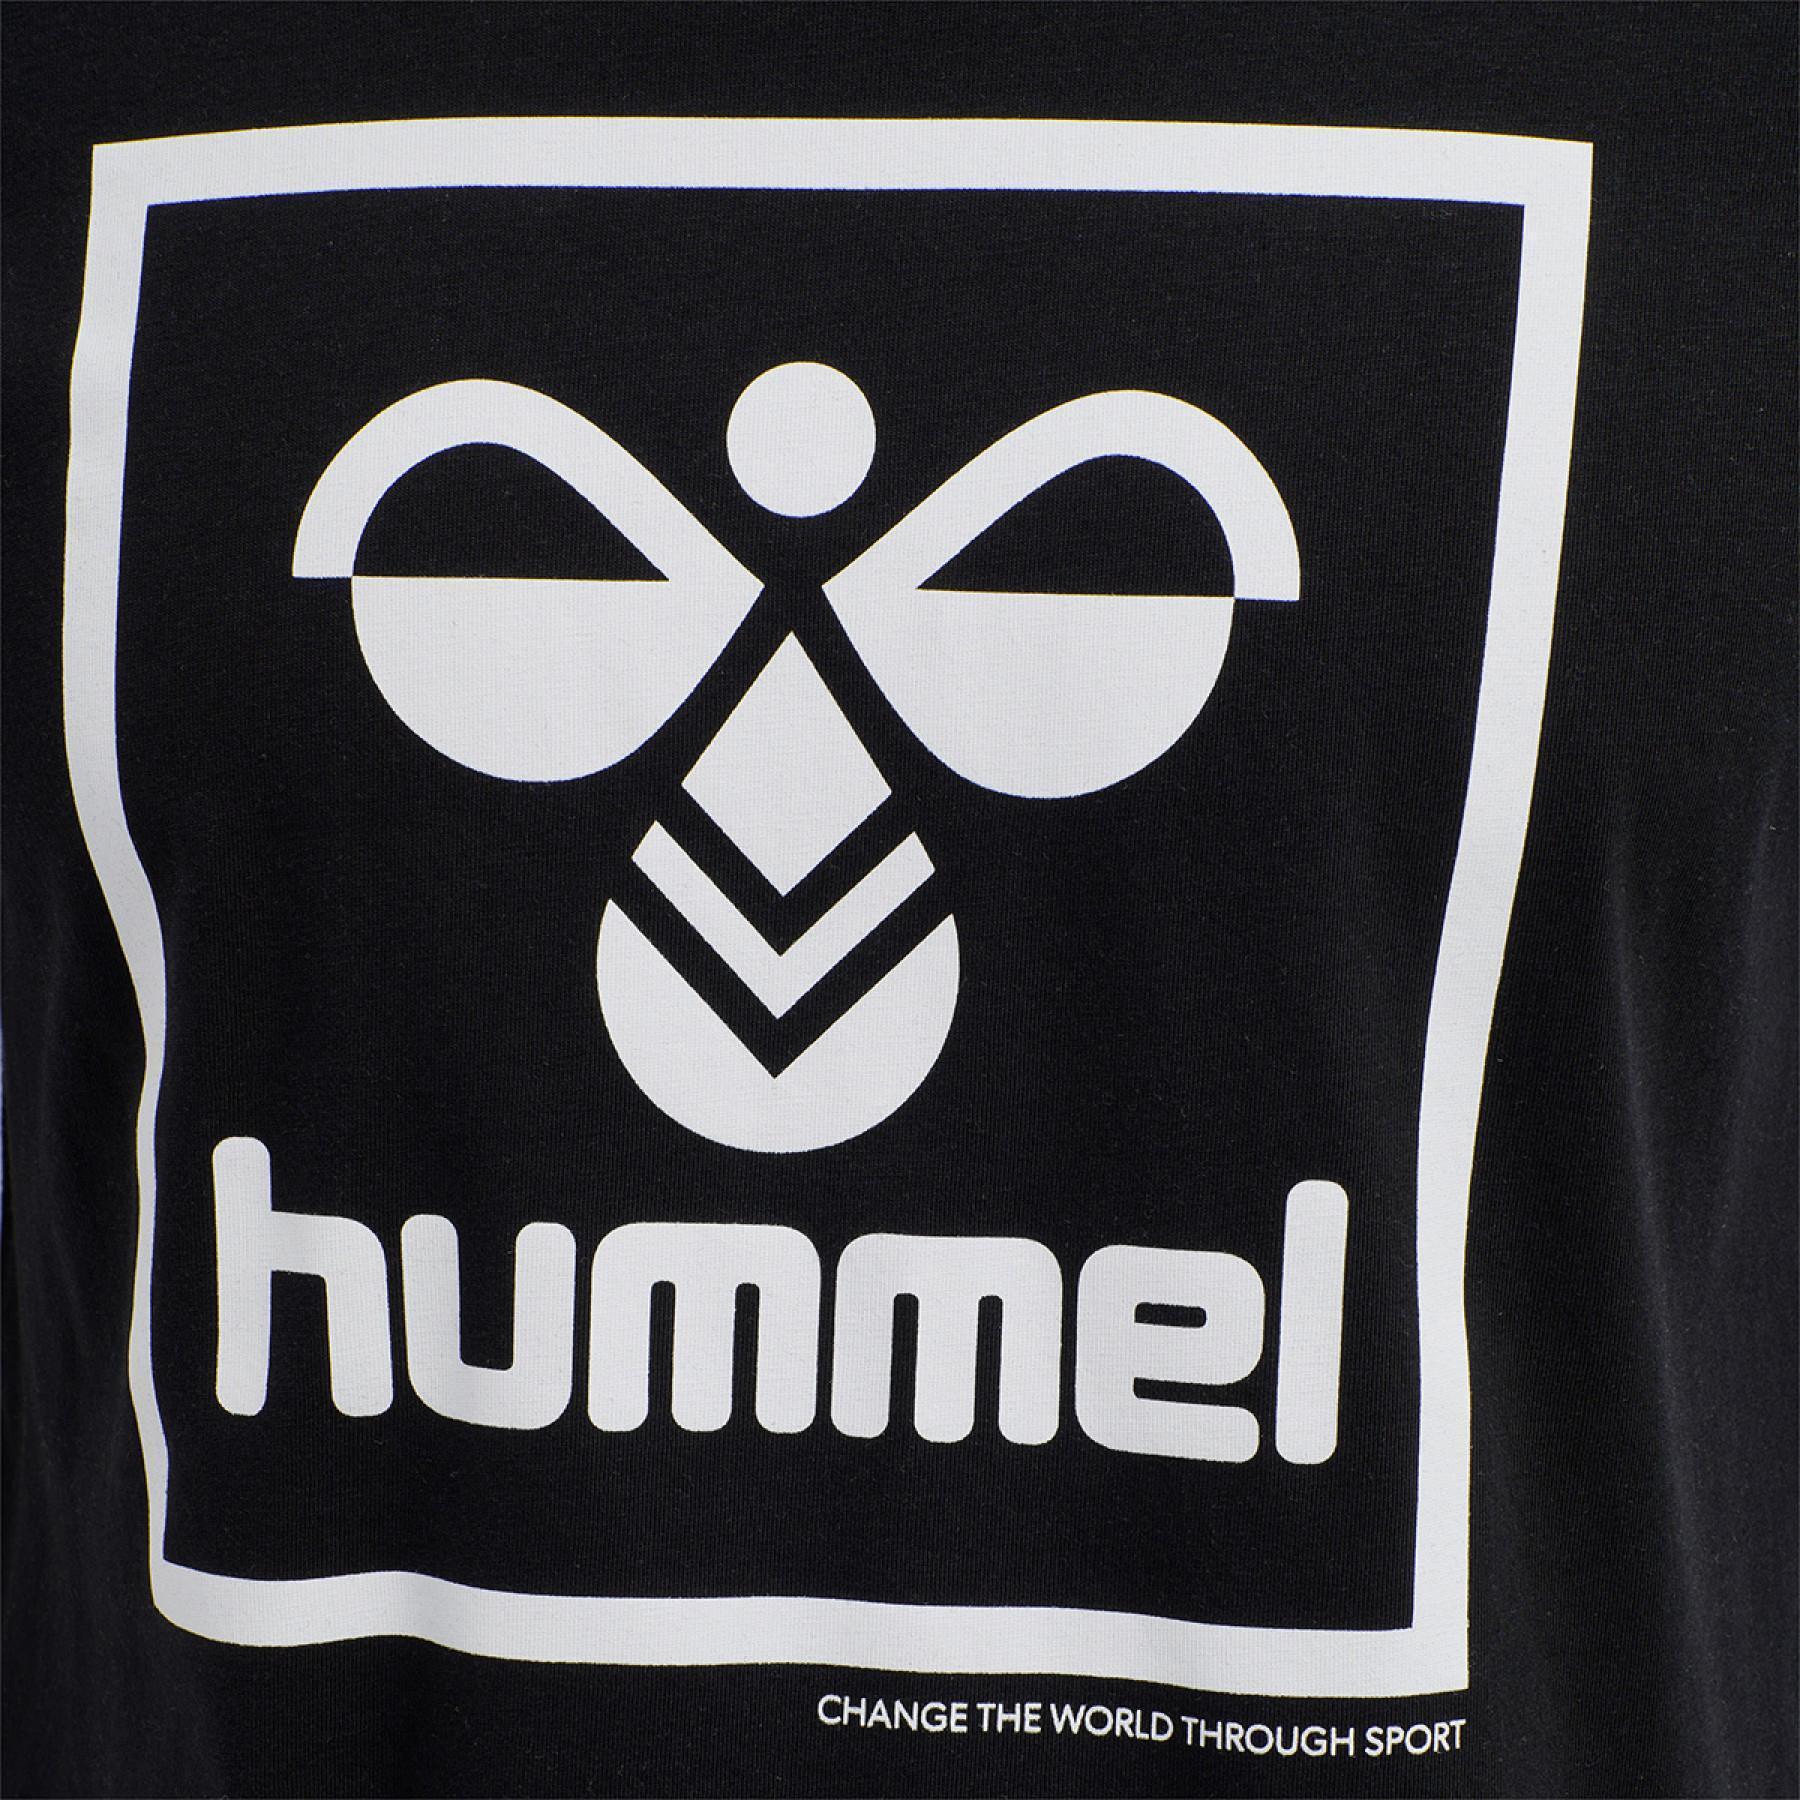 Koszulka Hummel hmlisam